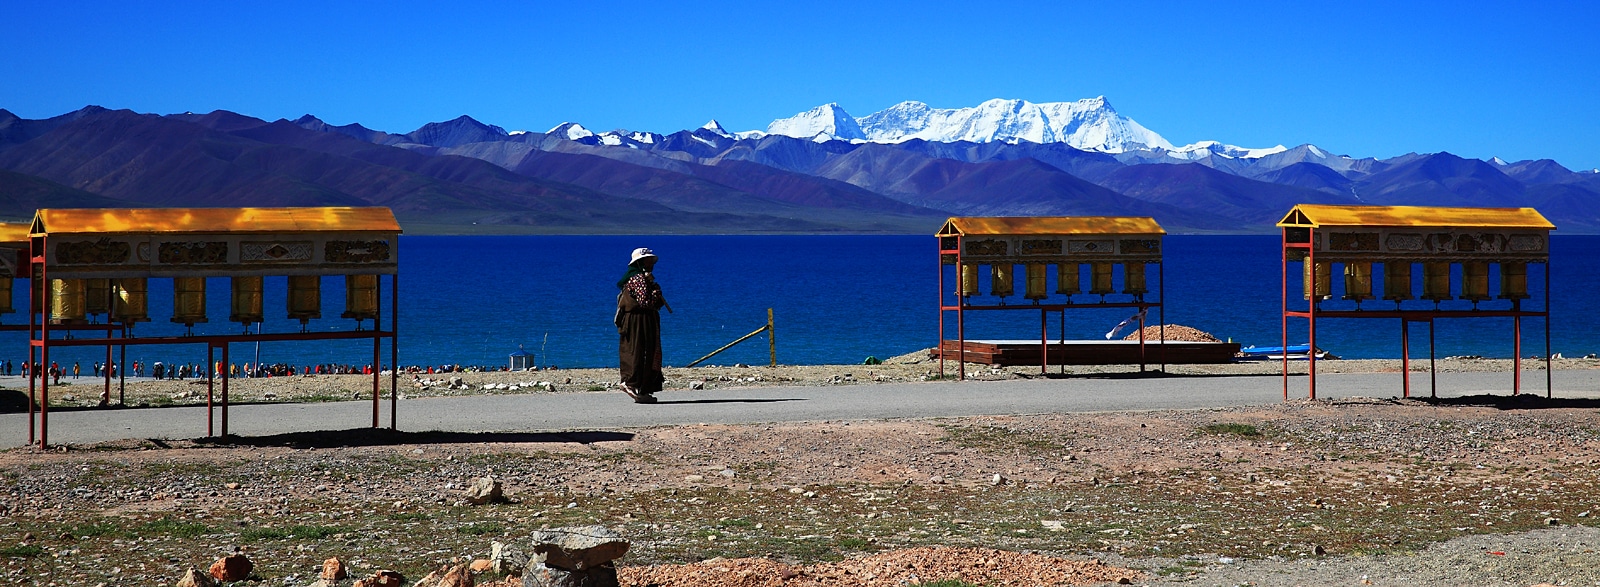 TIBET FUN FACTS! ECCO ALCUNE CURIOSITA’ SUL TETTO DEL MONDO, Mirabile Tibet